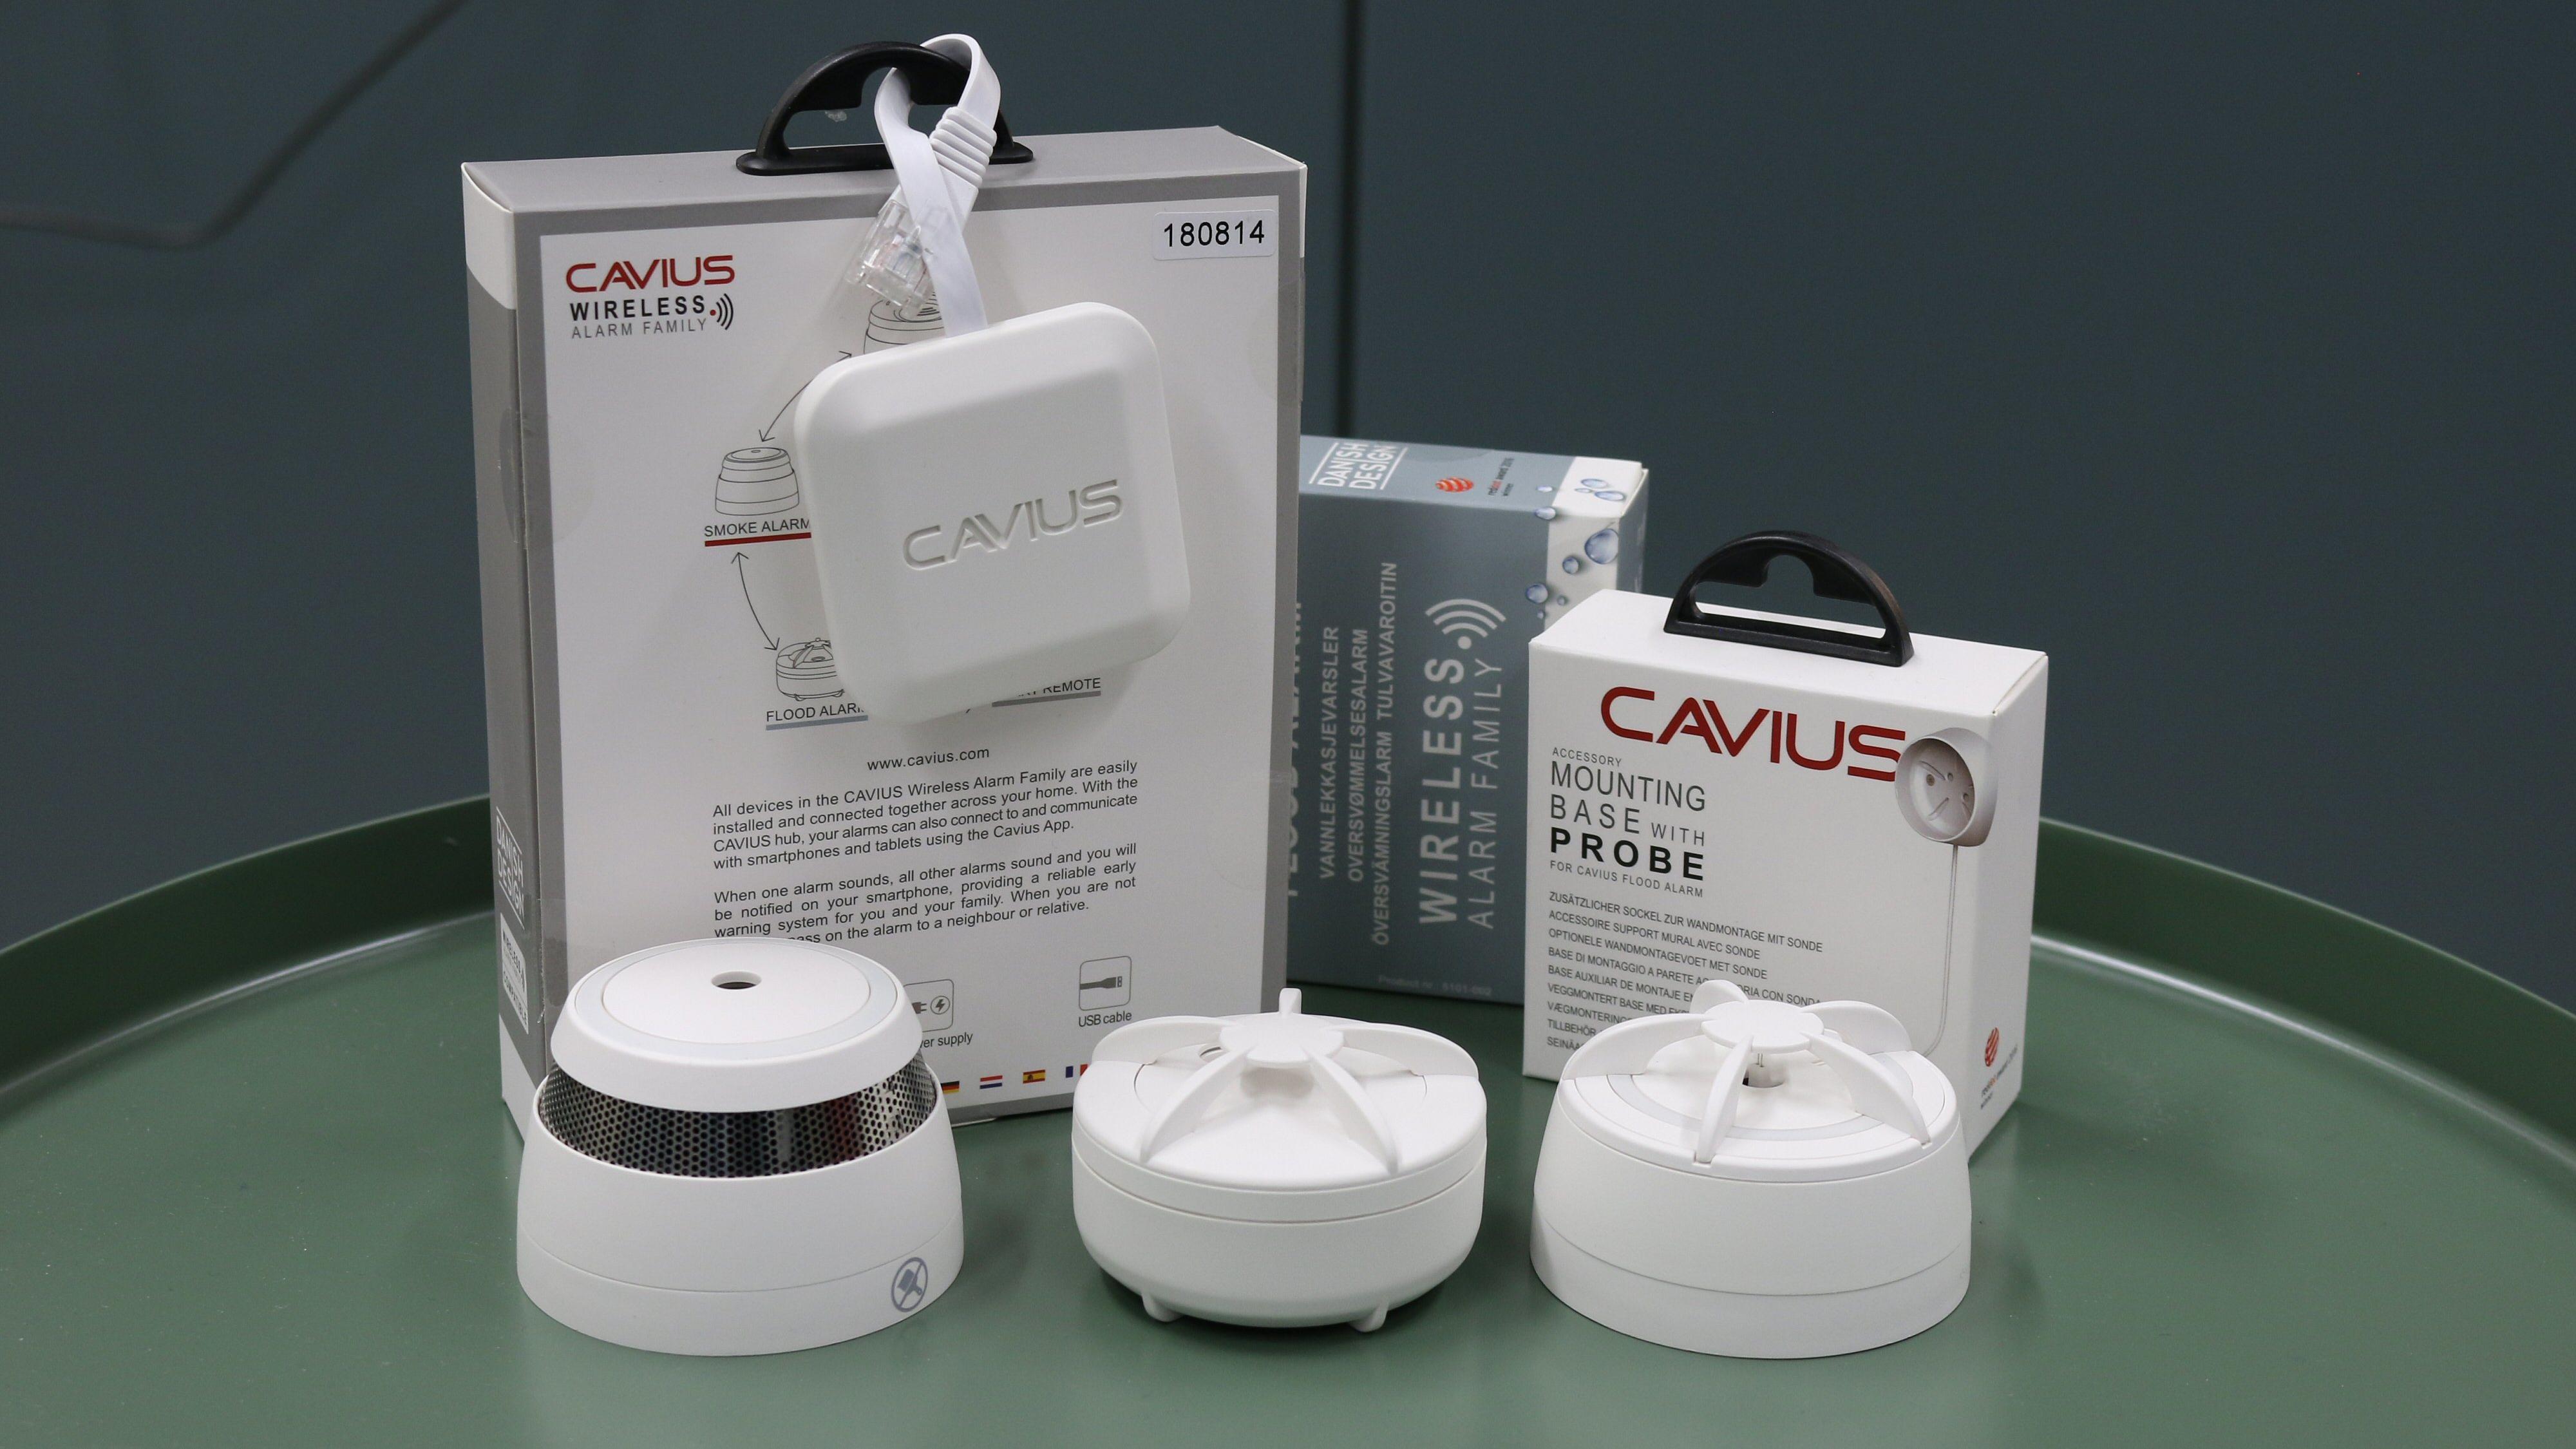 Cavius Wireless Alarm Family / Hub